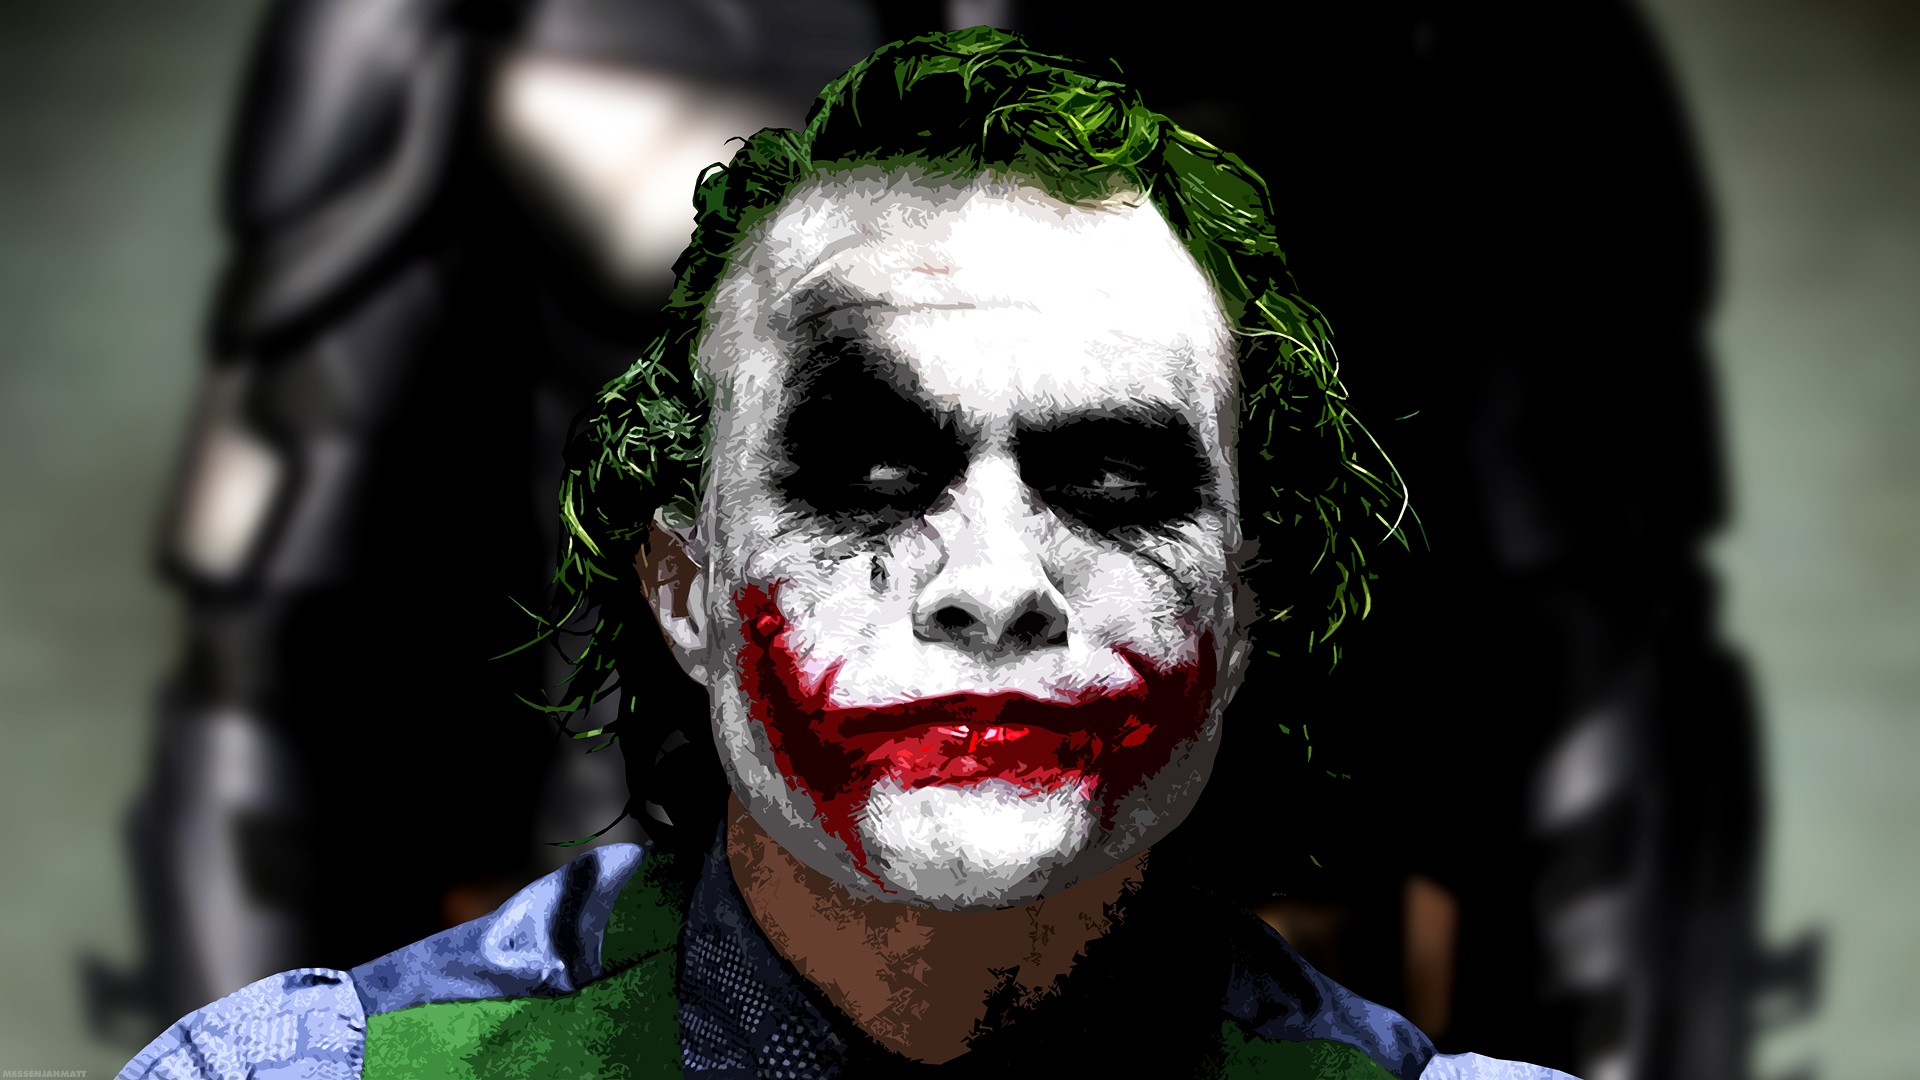 The Joker Heath Ledger Wallpaper Image Pictures Becuo